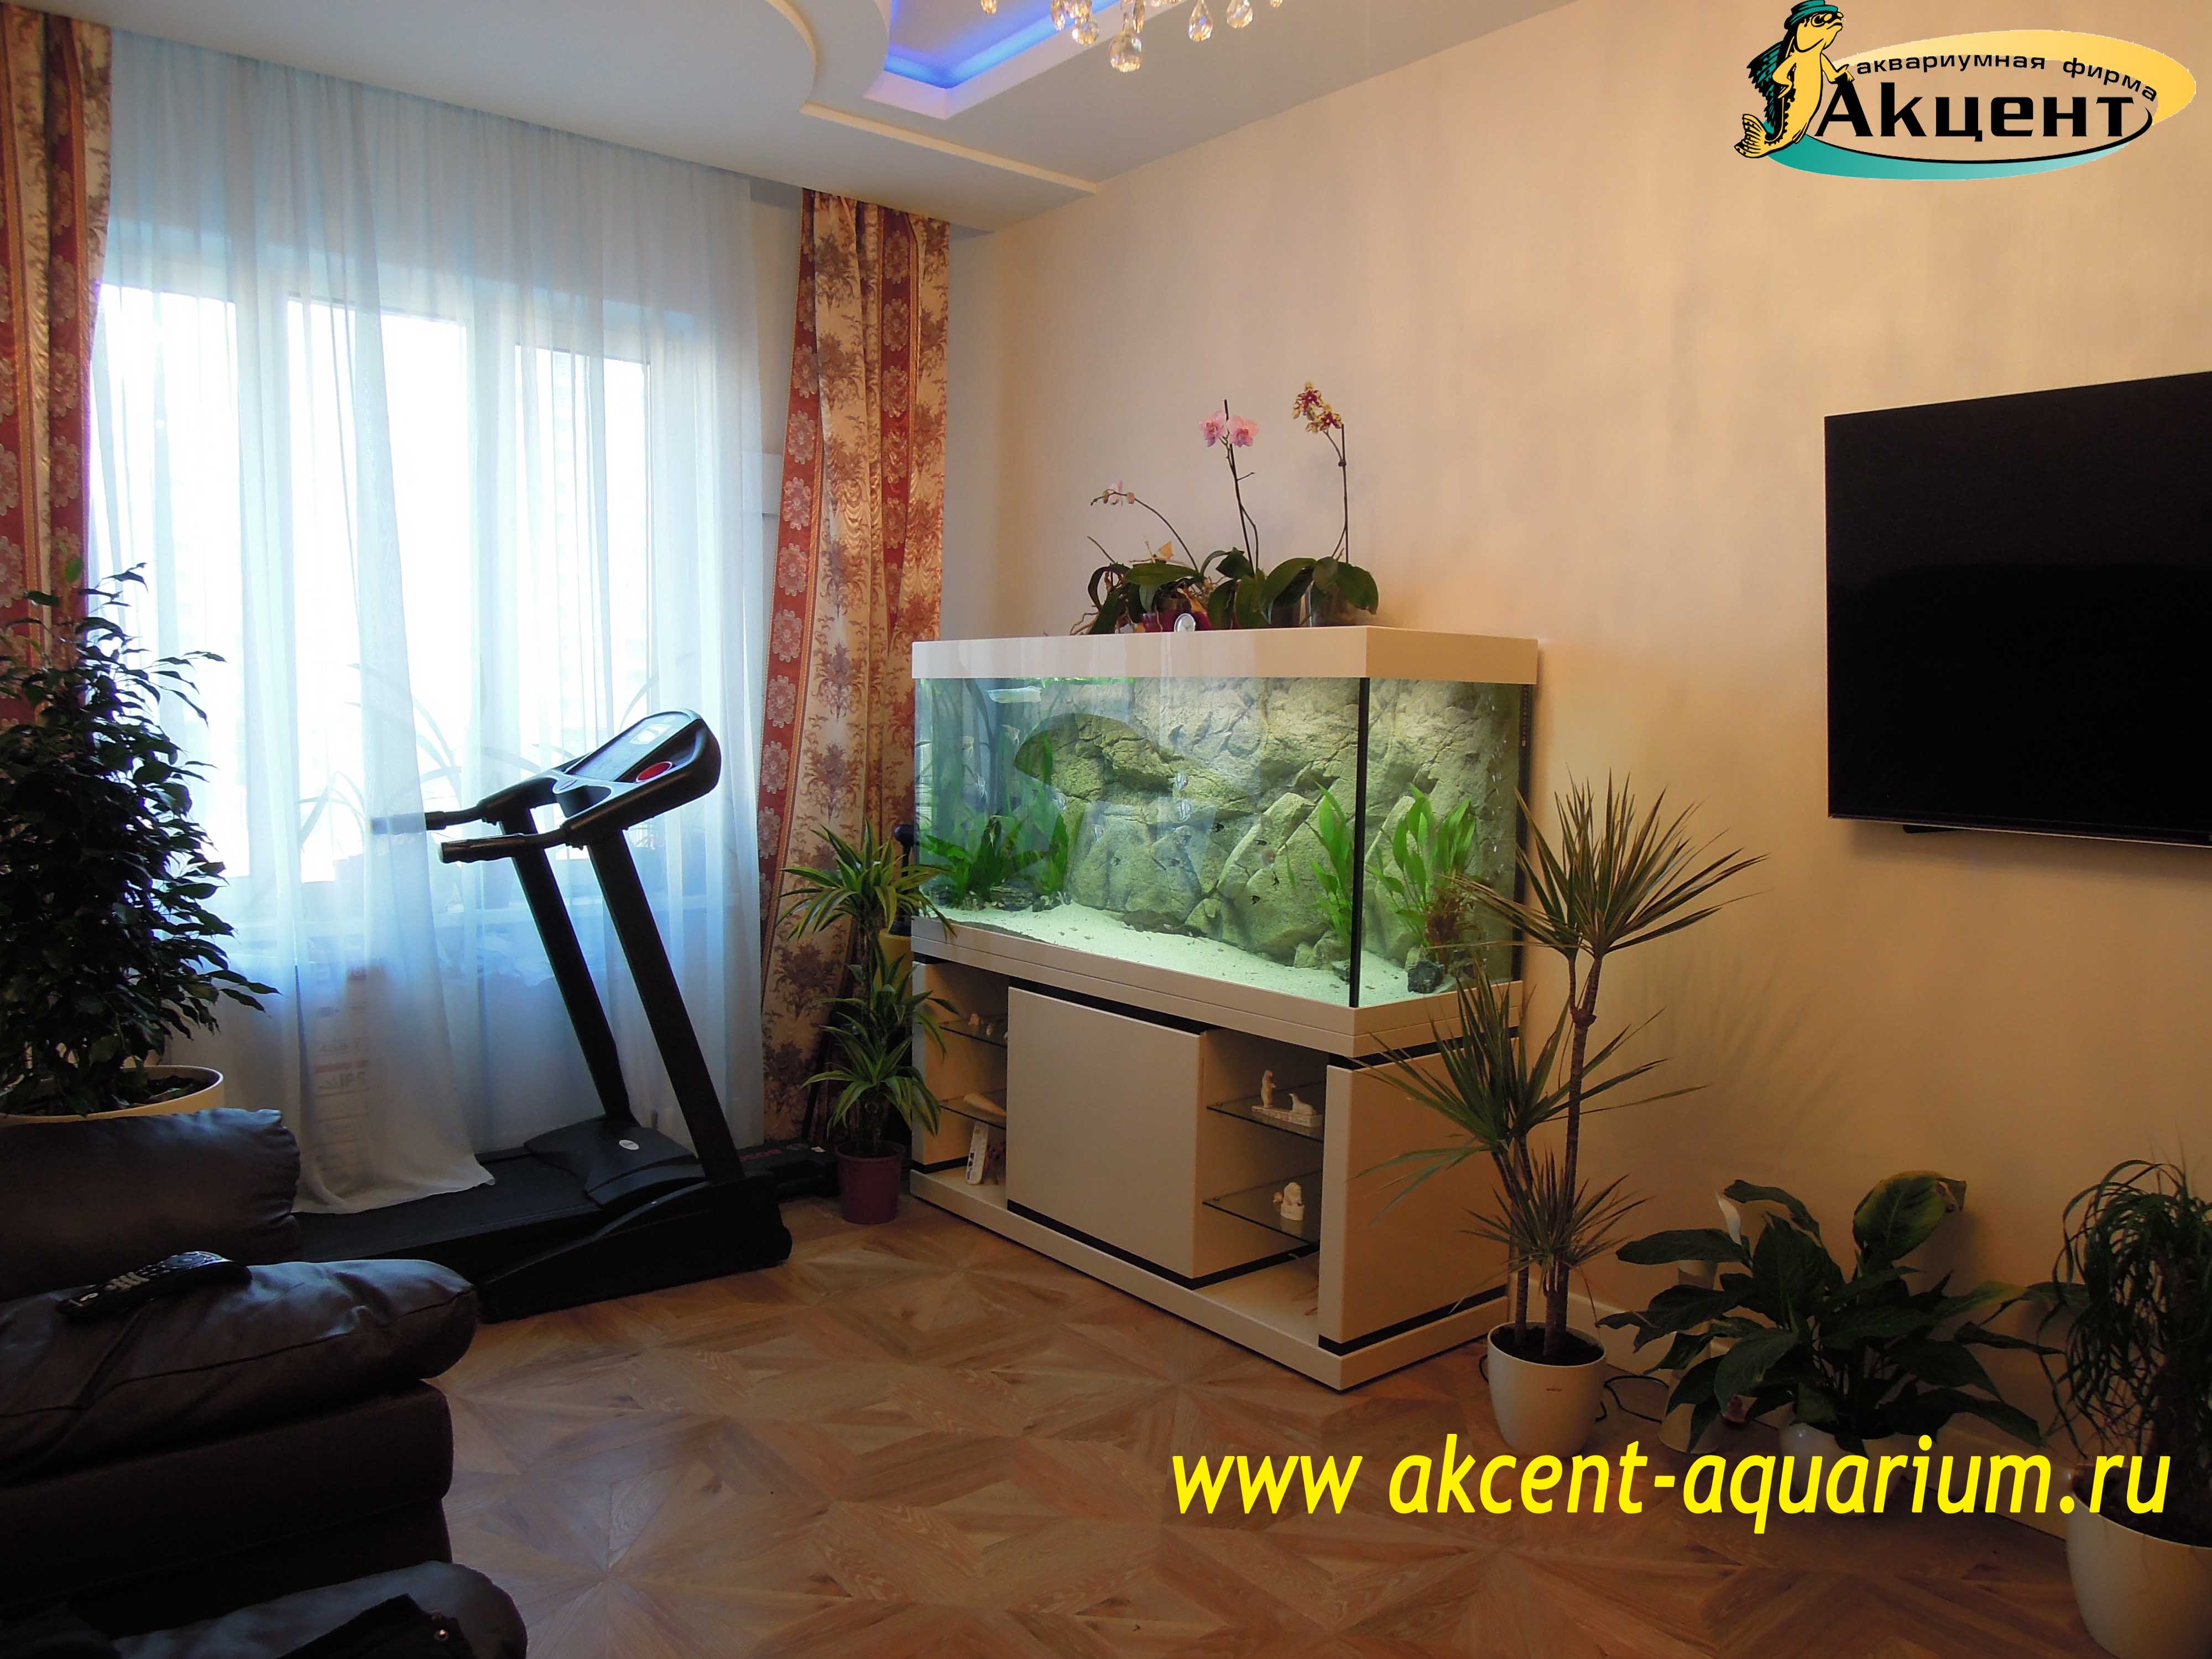 Акцент-аквариум, аквариум 660 литров с объемным фоном, отделка акрил